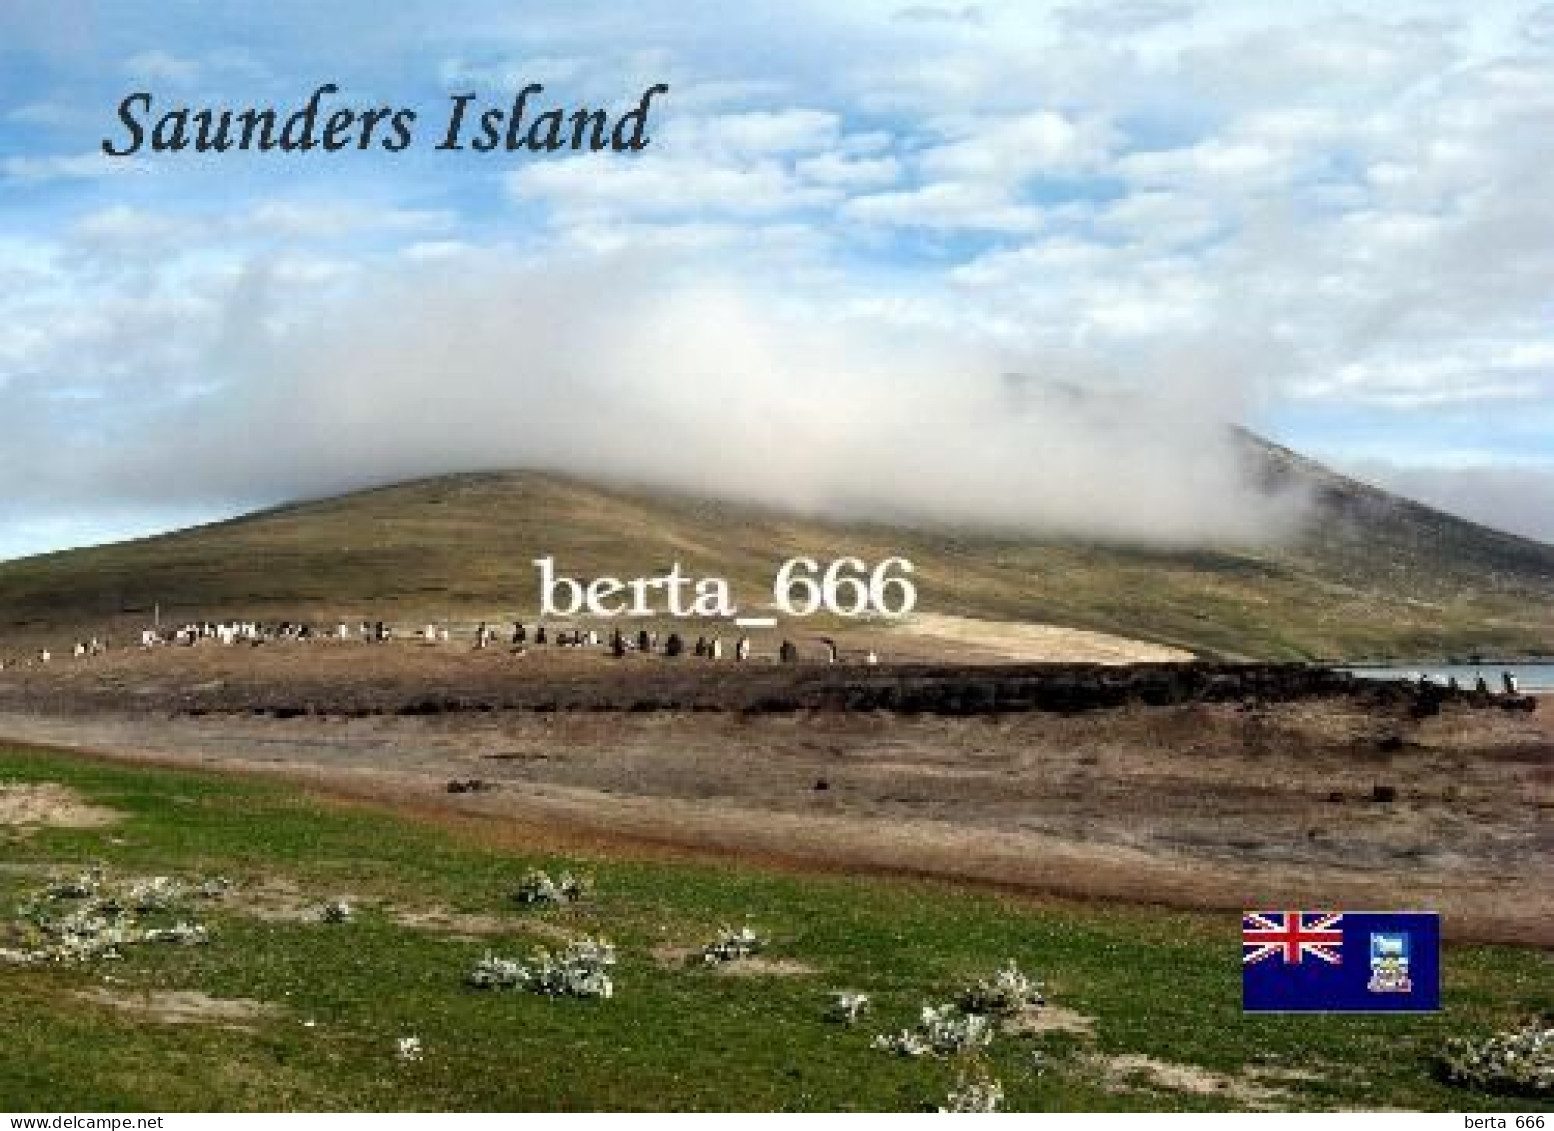 Falklands Islands Saunders Island Malvinas New Postcard - Falkland